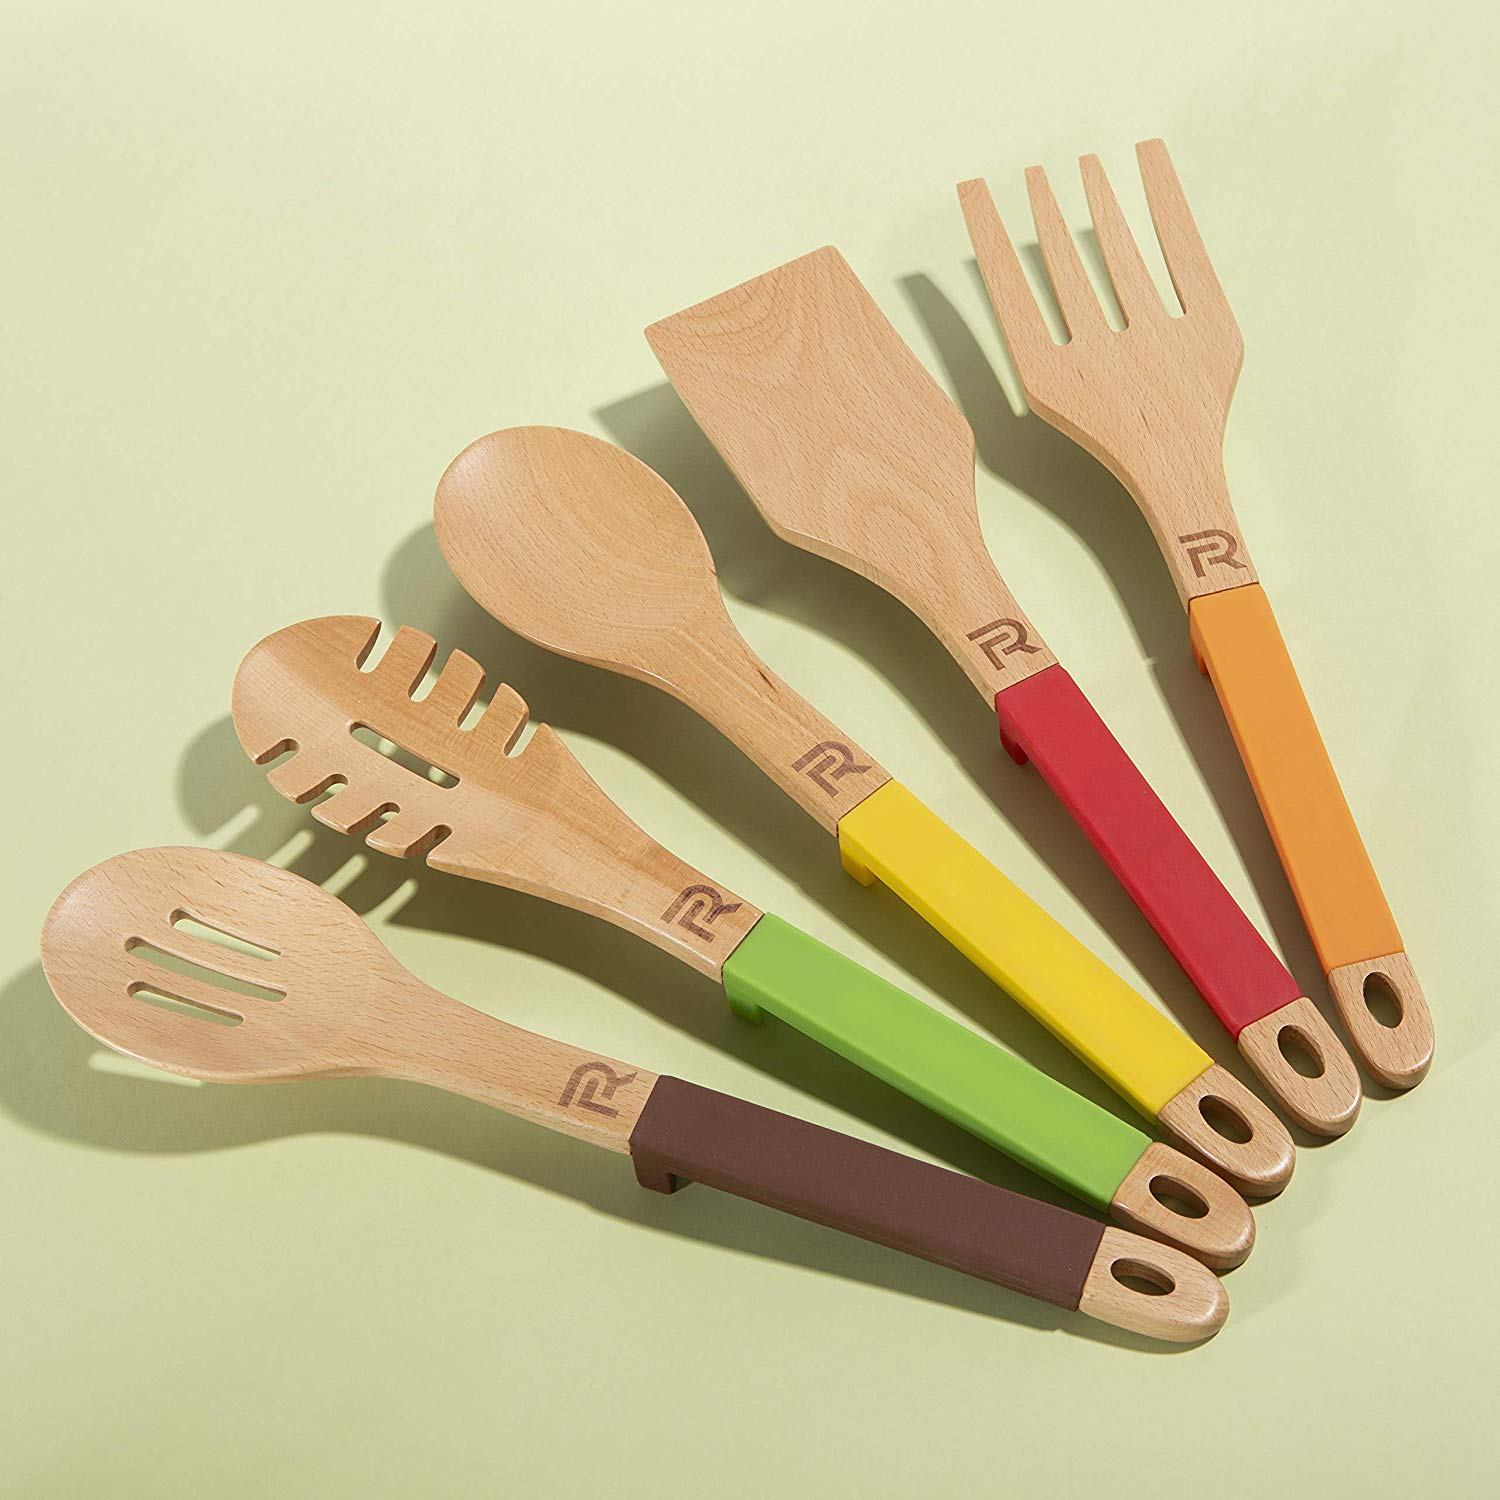 Riveira Star War Gifts Home Decor Wooden Spoons For Cooking Utensils Set  6-piece Starwars Gifts Kitchen Utensils Spatulas For Nonstick Cookware Gift